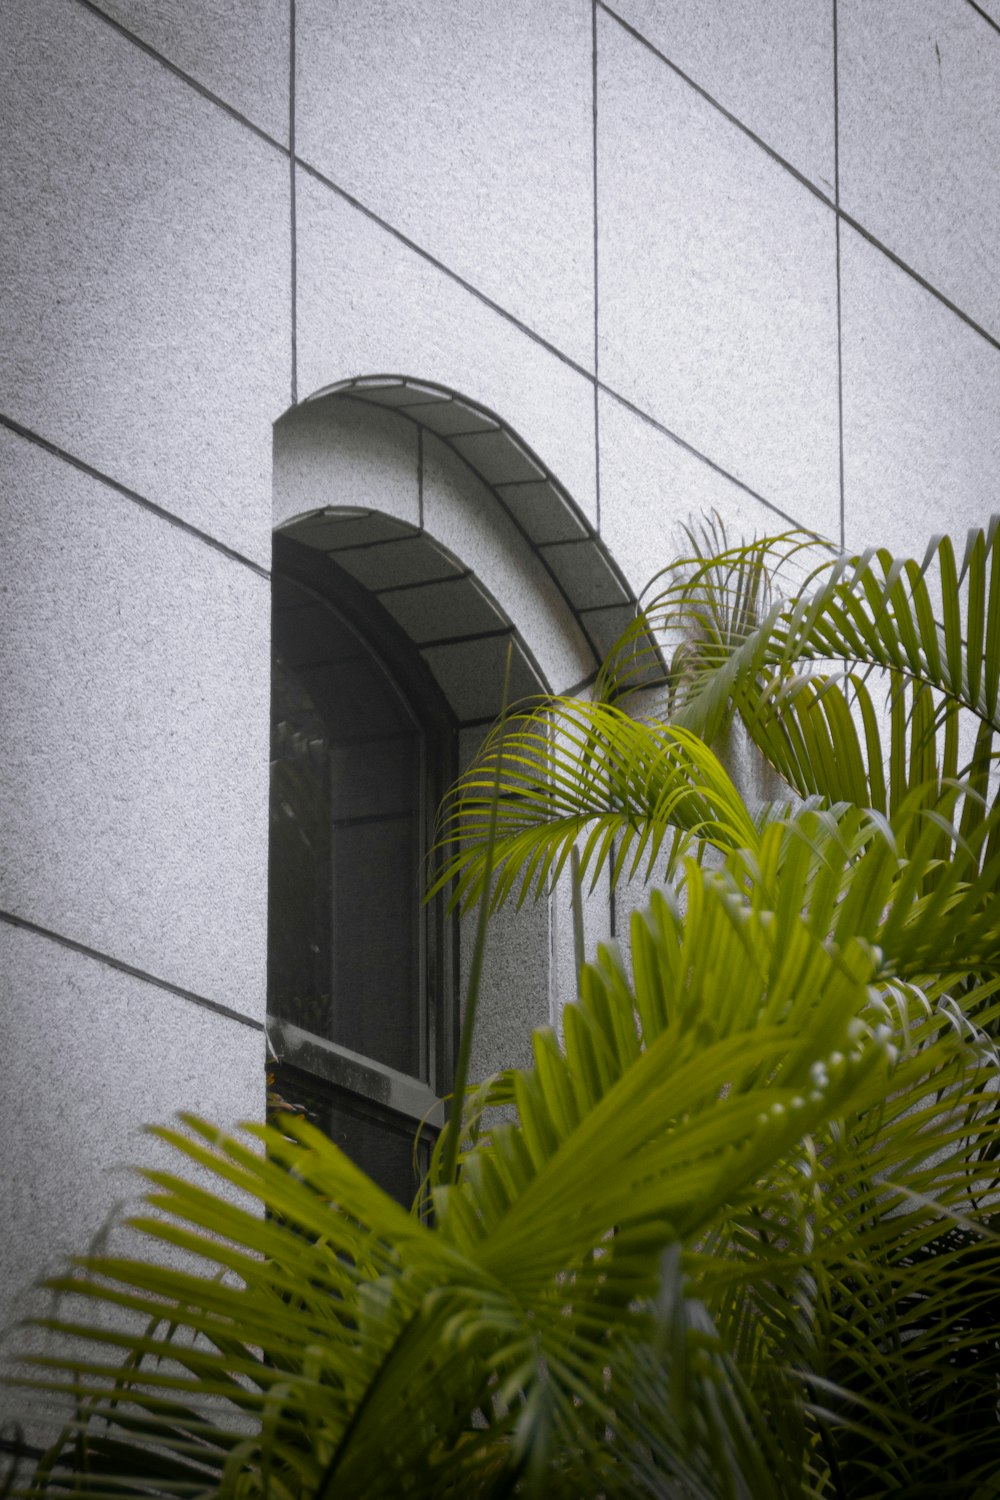 a plant next to a building